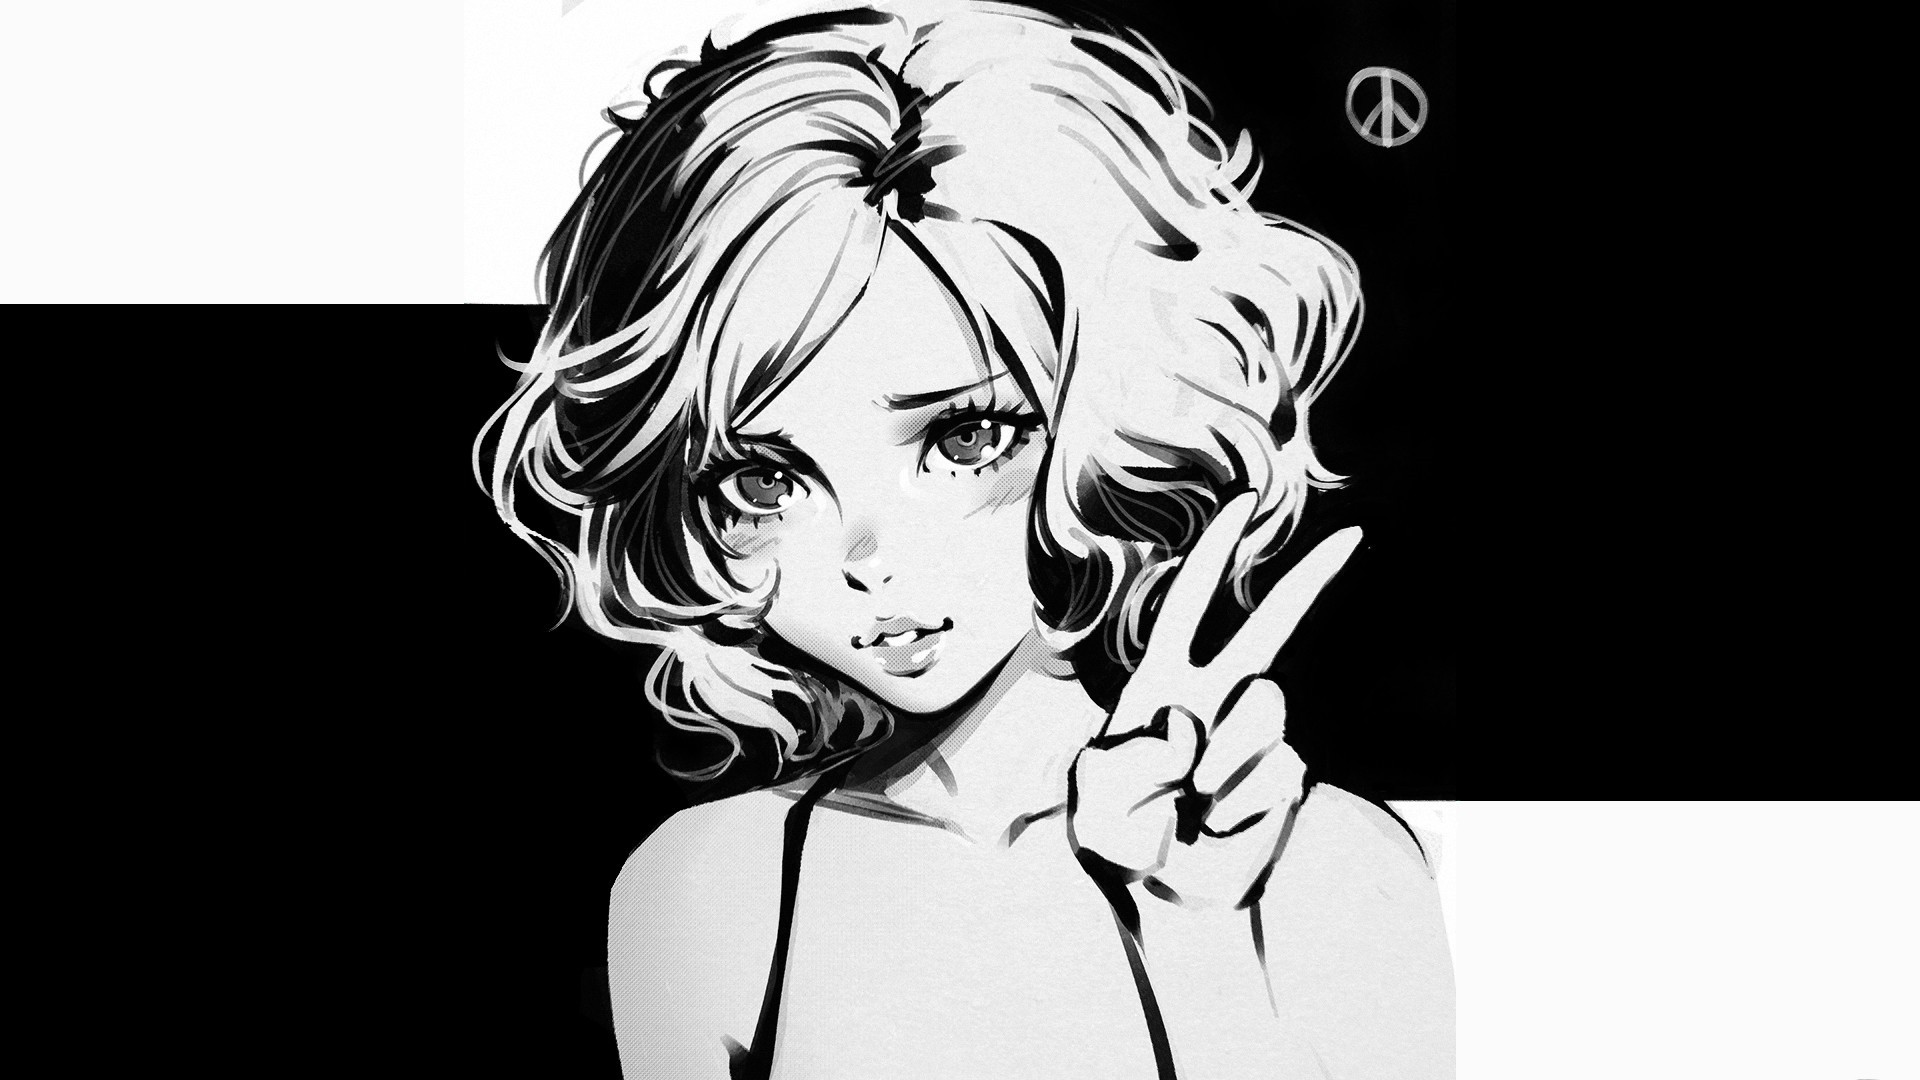 Anime Black And White Wallpaper